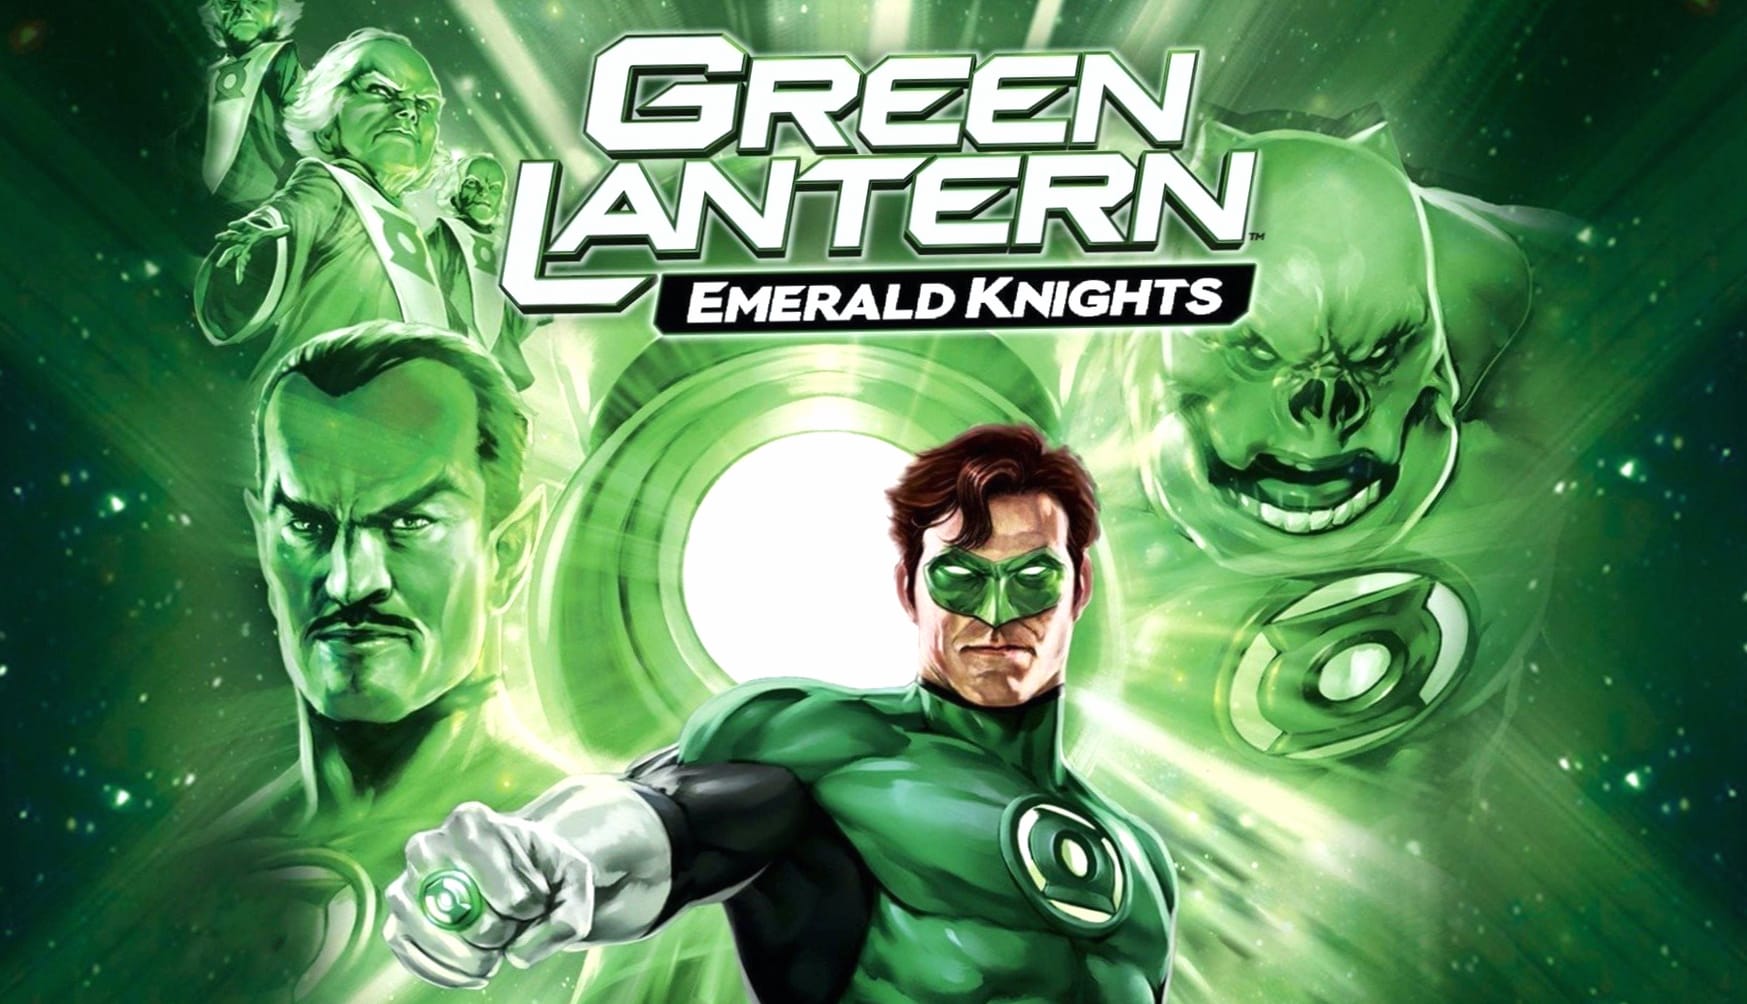 Green Lantern emerald knights wallpapers HD quality